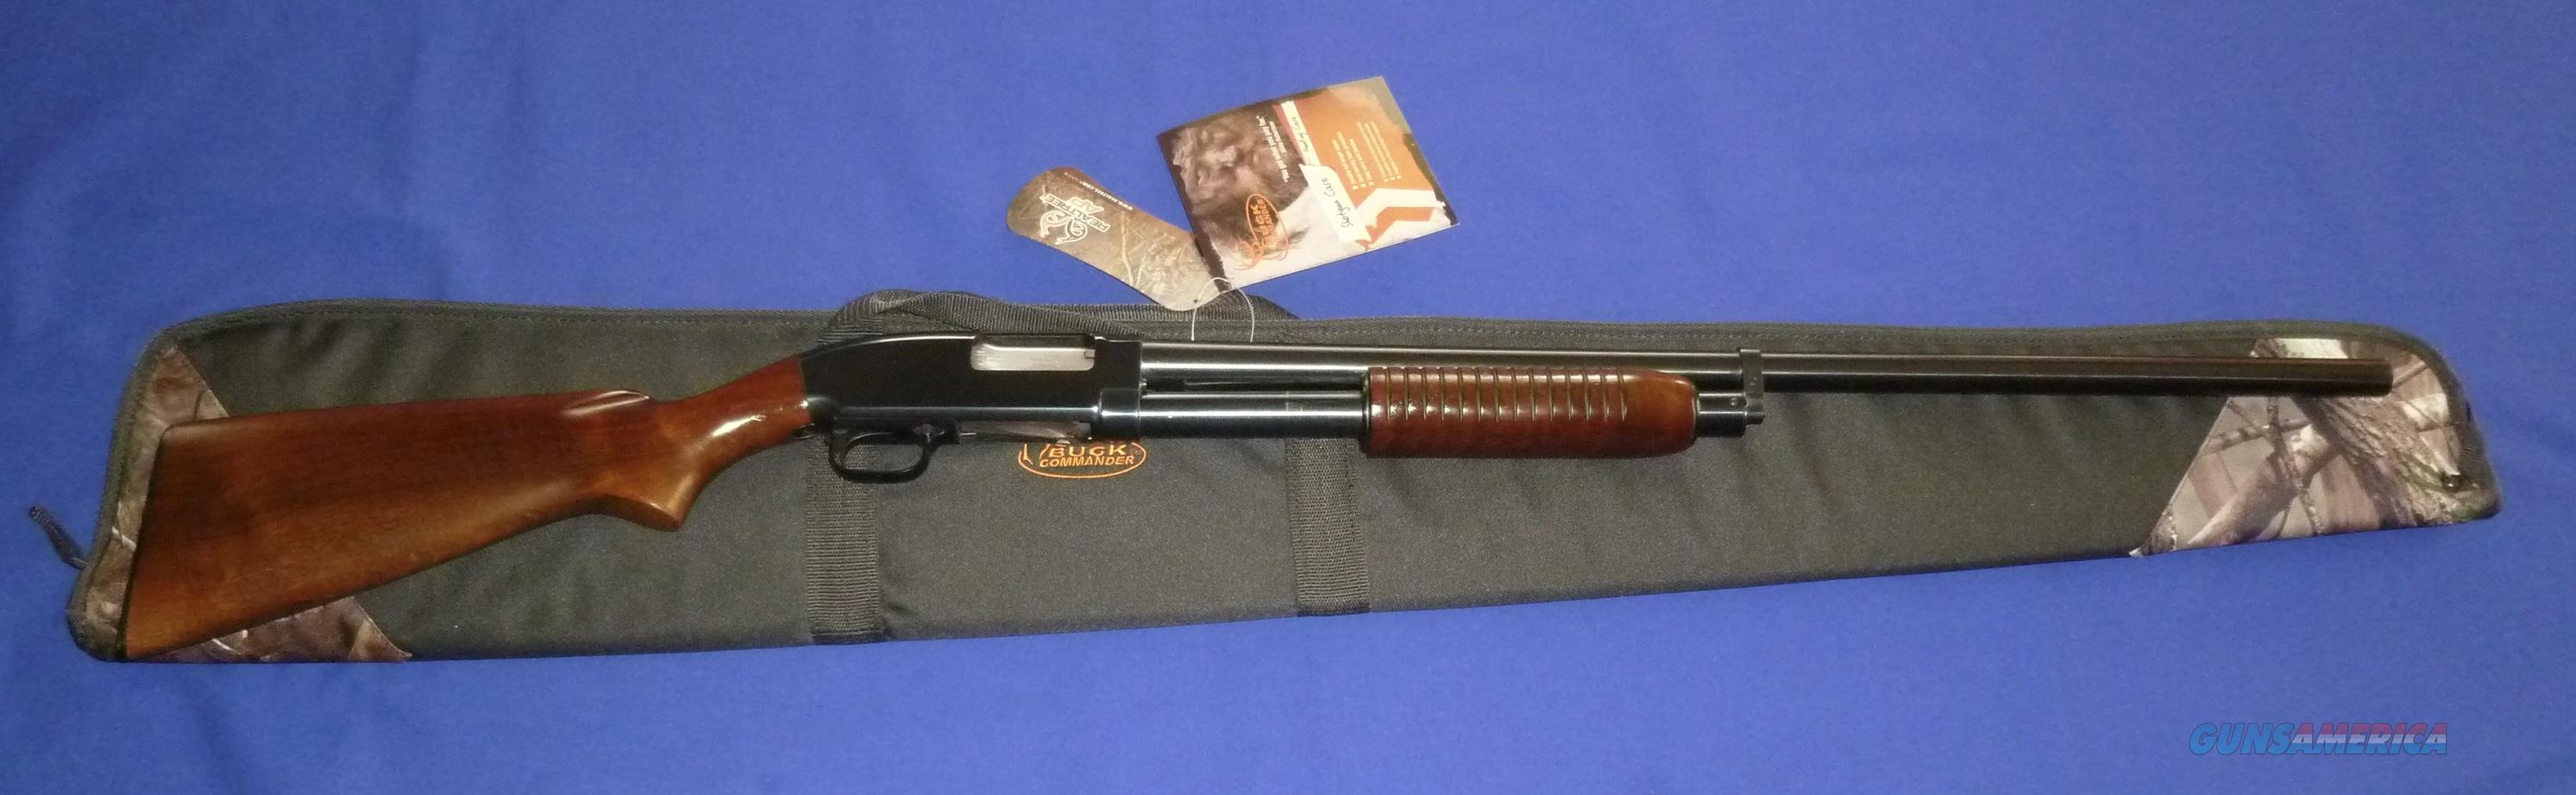 winchester model 25 12 gauge pump shotgun